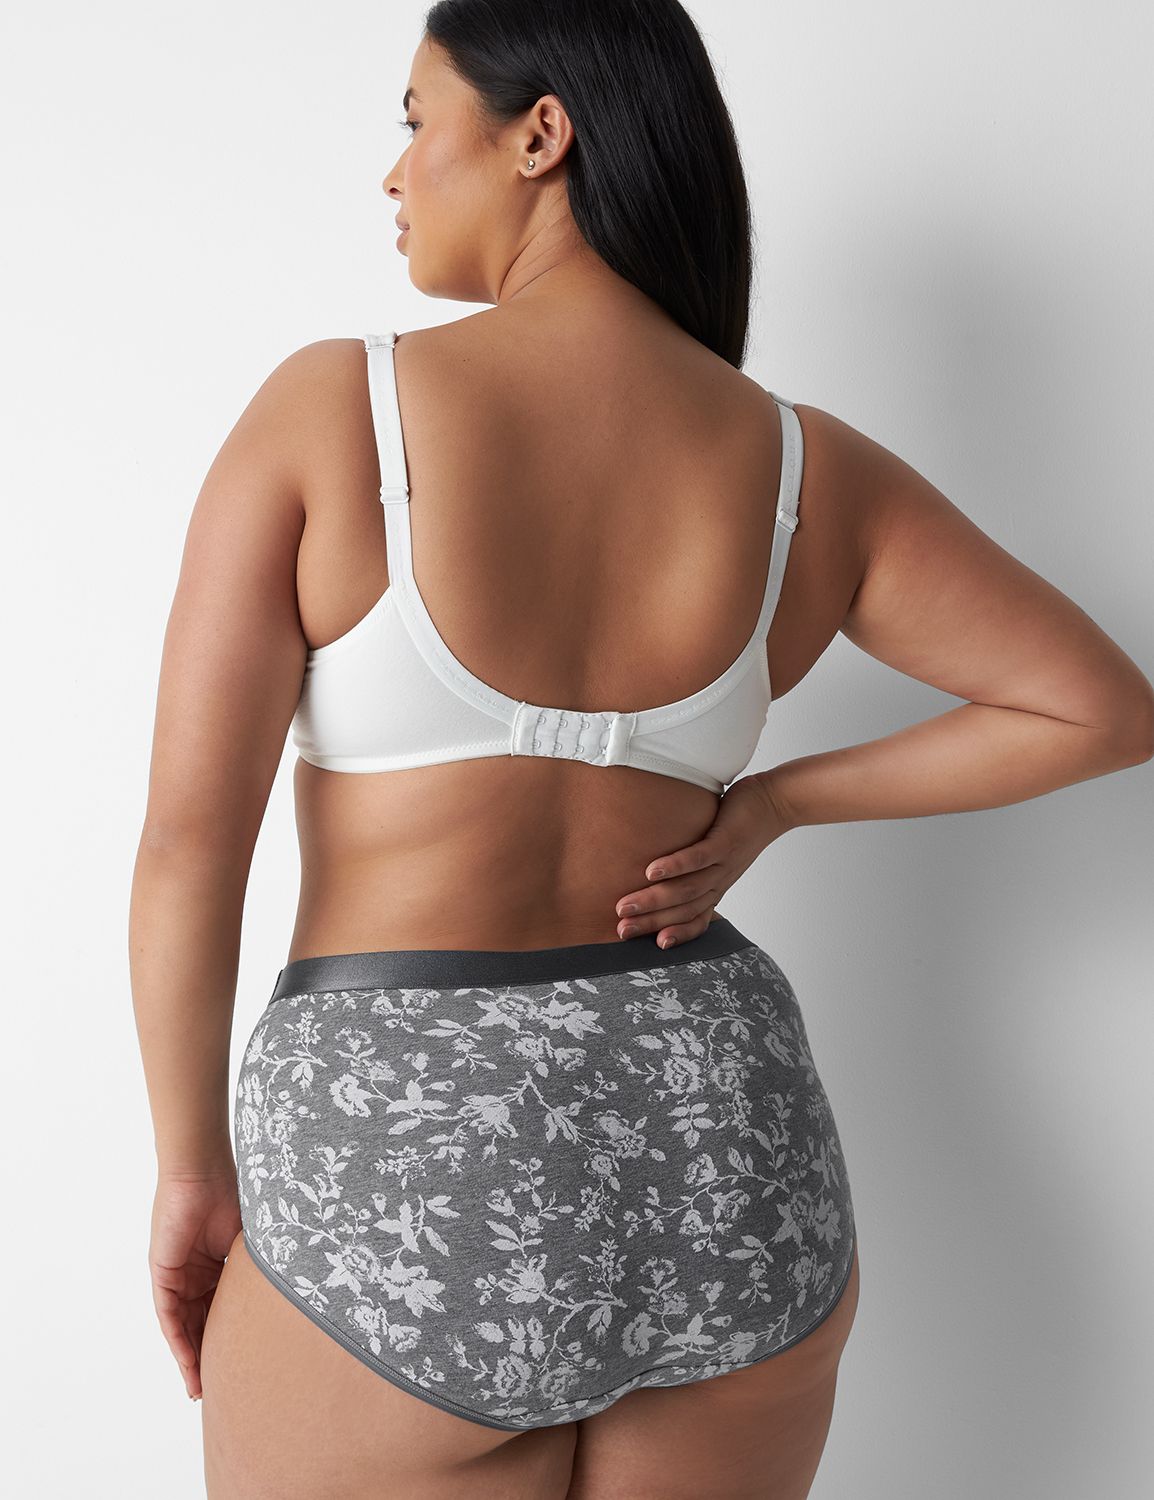 Grey cotton sports bra – The Pantry Underwear